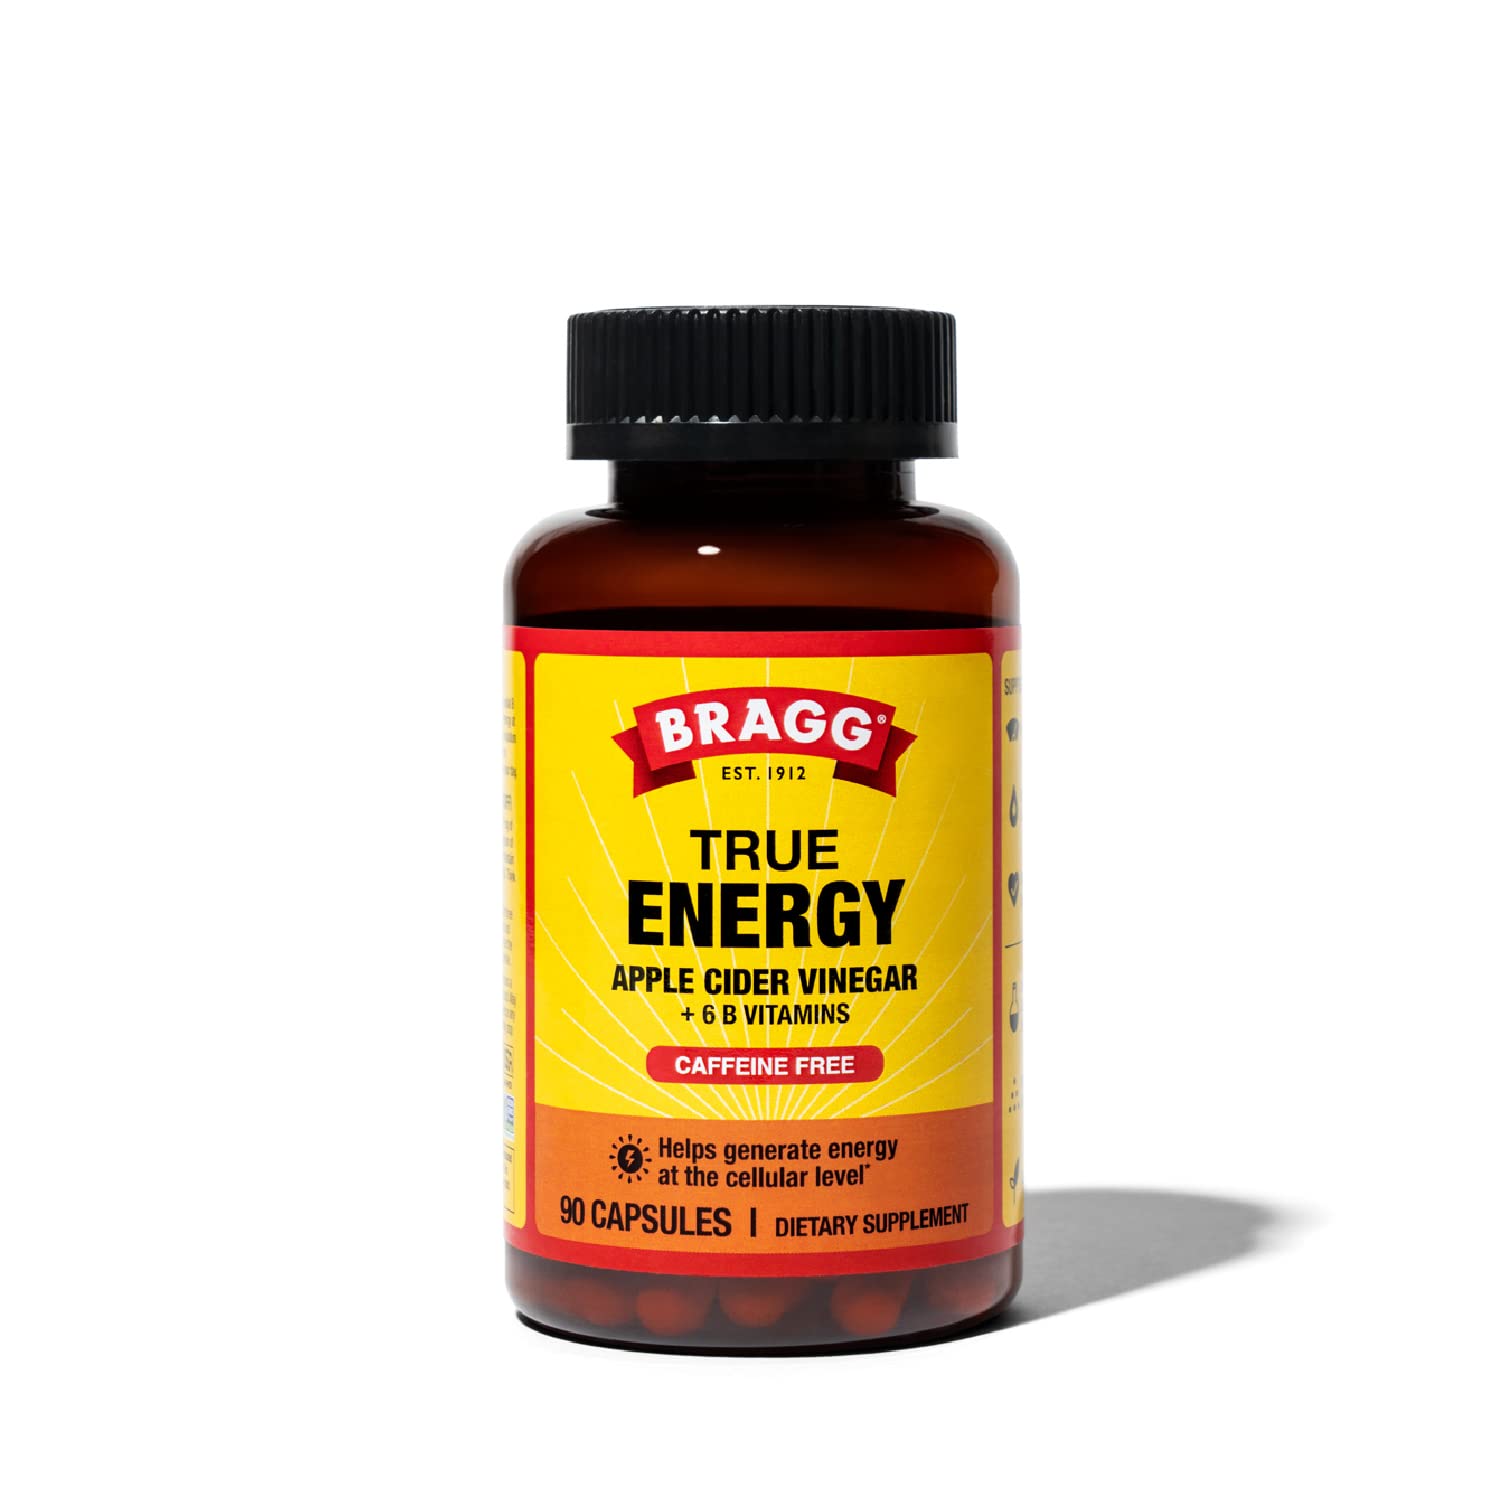 Bragg Apple Cider Vinegar True Energy Capsules – 6 B Vitamins – Caffeine Free - 750mg of Acetic Acid – Weight Management - Non-GMO, Vegan, Gluten Free, No Sugar - (90 Pills)… (1)